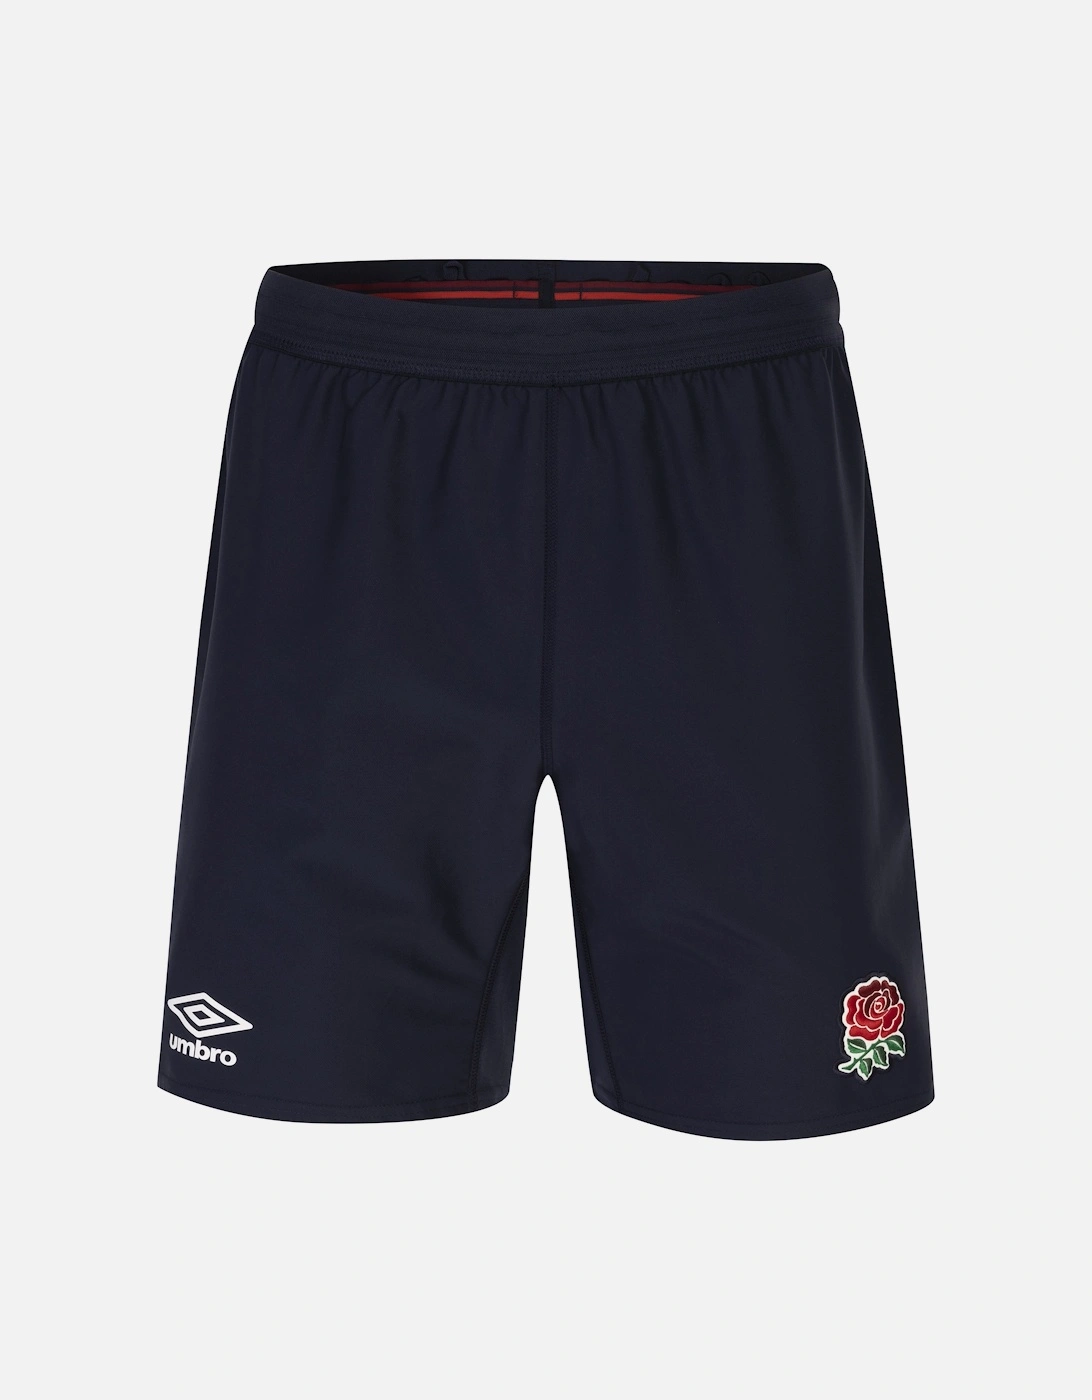 Mens 23/24 Alternate England Rugby Replica Shorts, 6 of 5